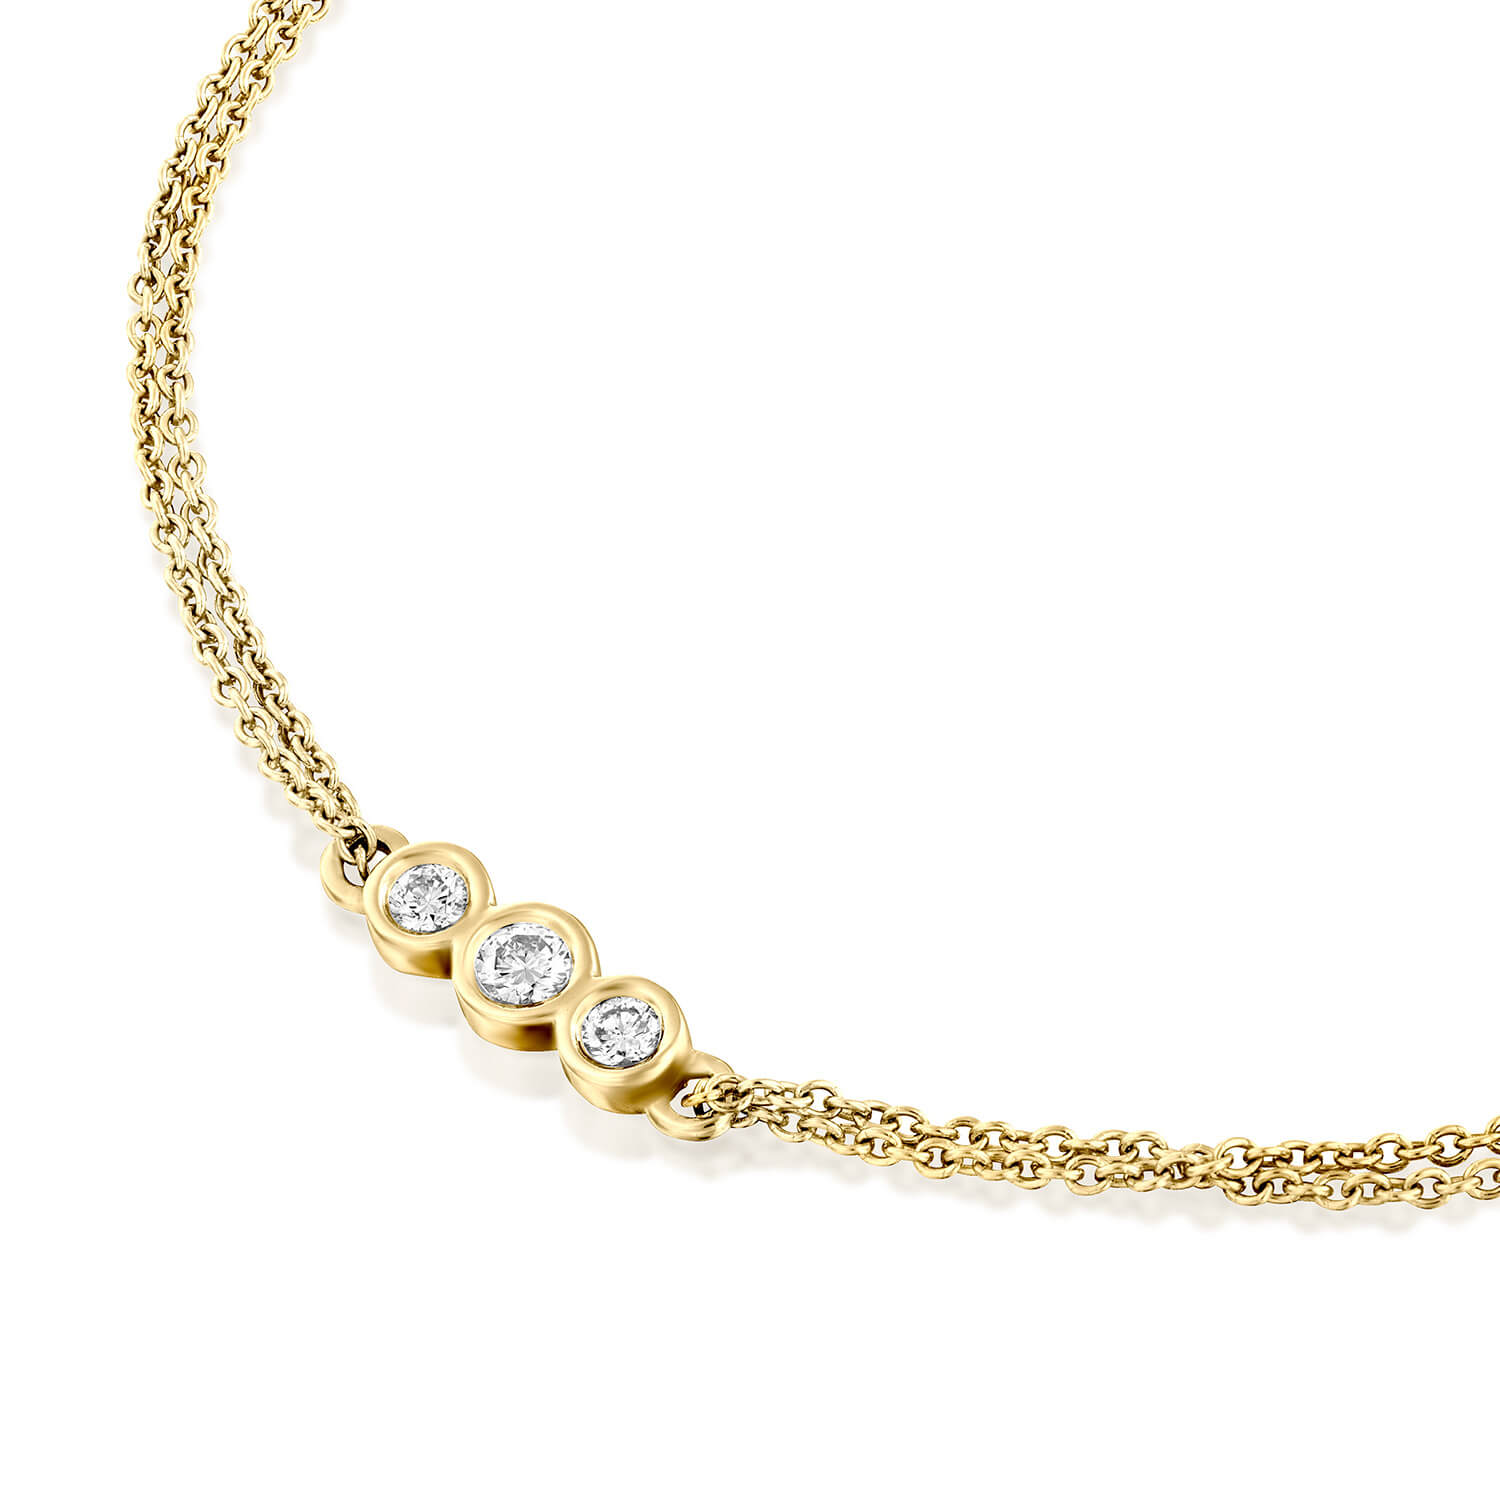 3 Bezel Set White Diamonds Bracelet Bangle - #jewelry #bracelet  @EtsyMktgTool #classicbangle … | Diamond bracelet, Diamond bracelet design, Diamond  bangles bracelet